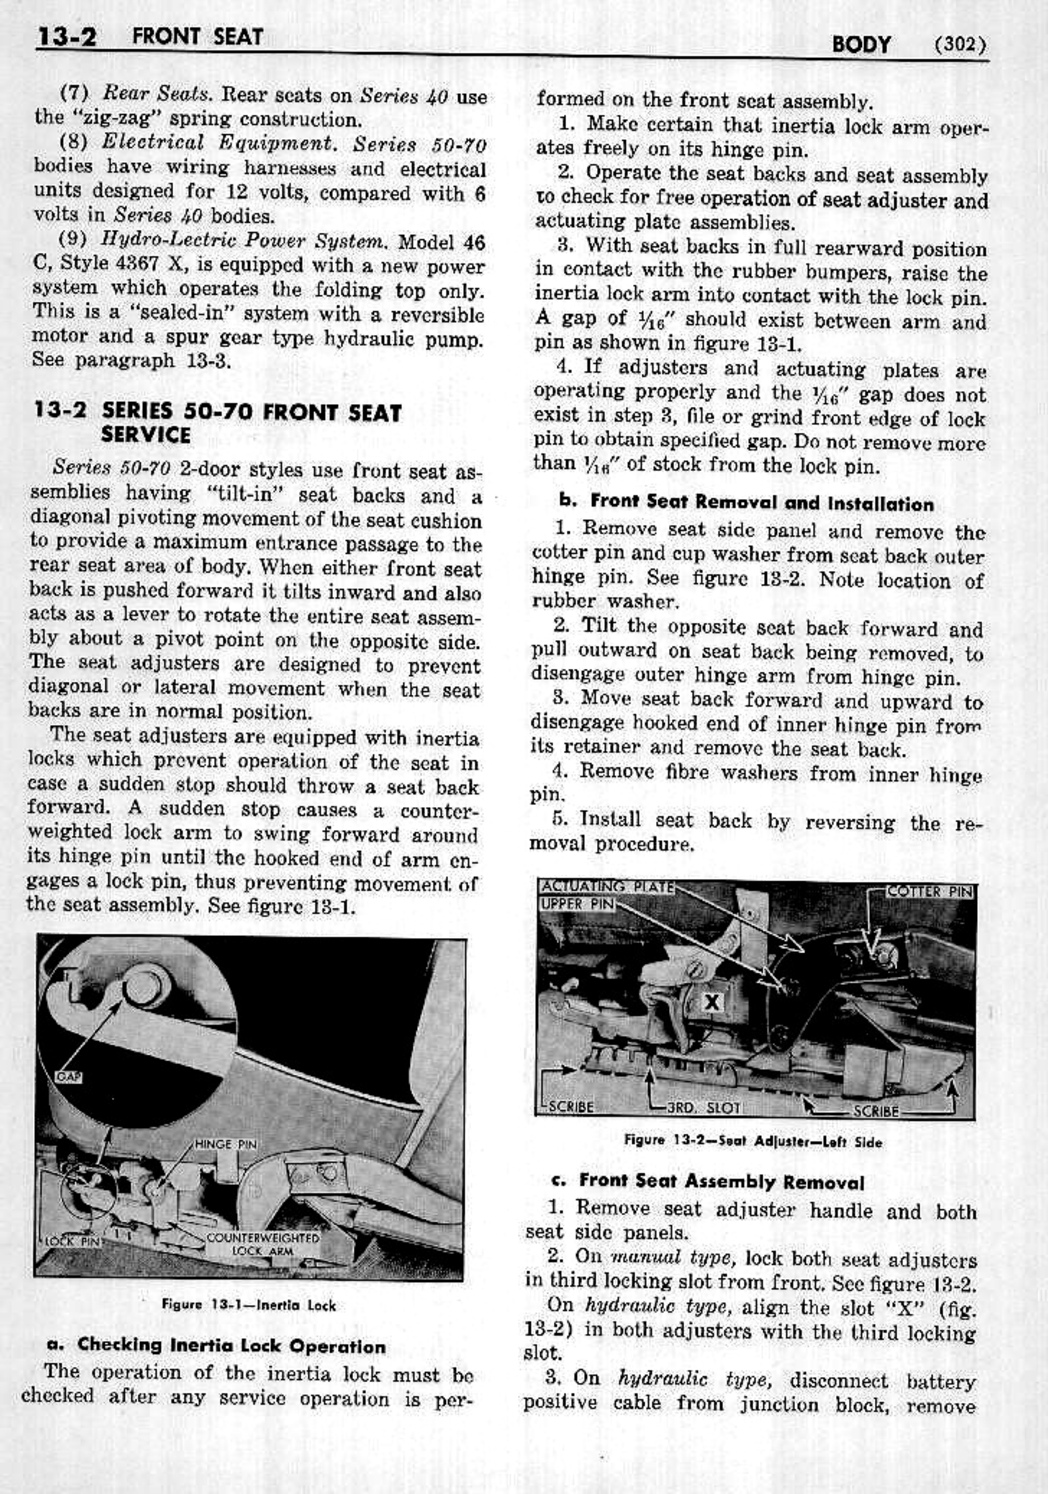 n_14 1953 Buick Shop Manual - Body-002-002.jpg